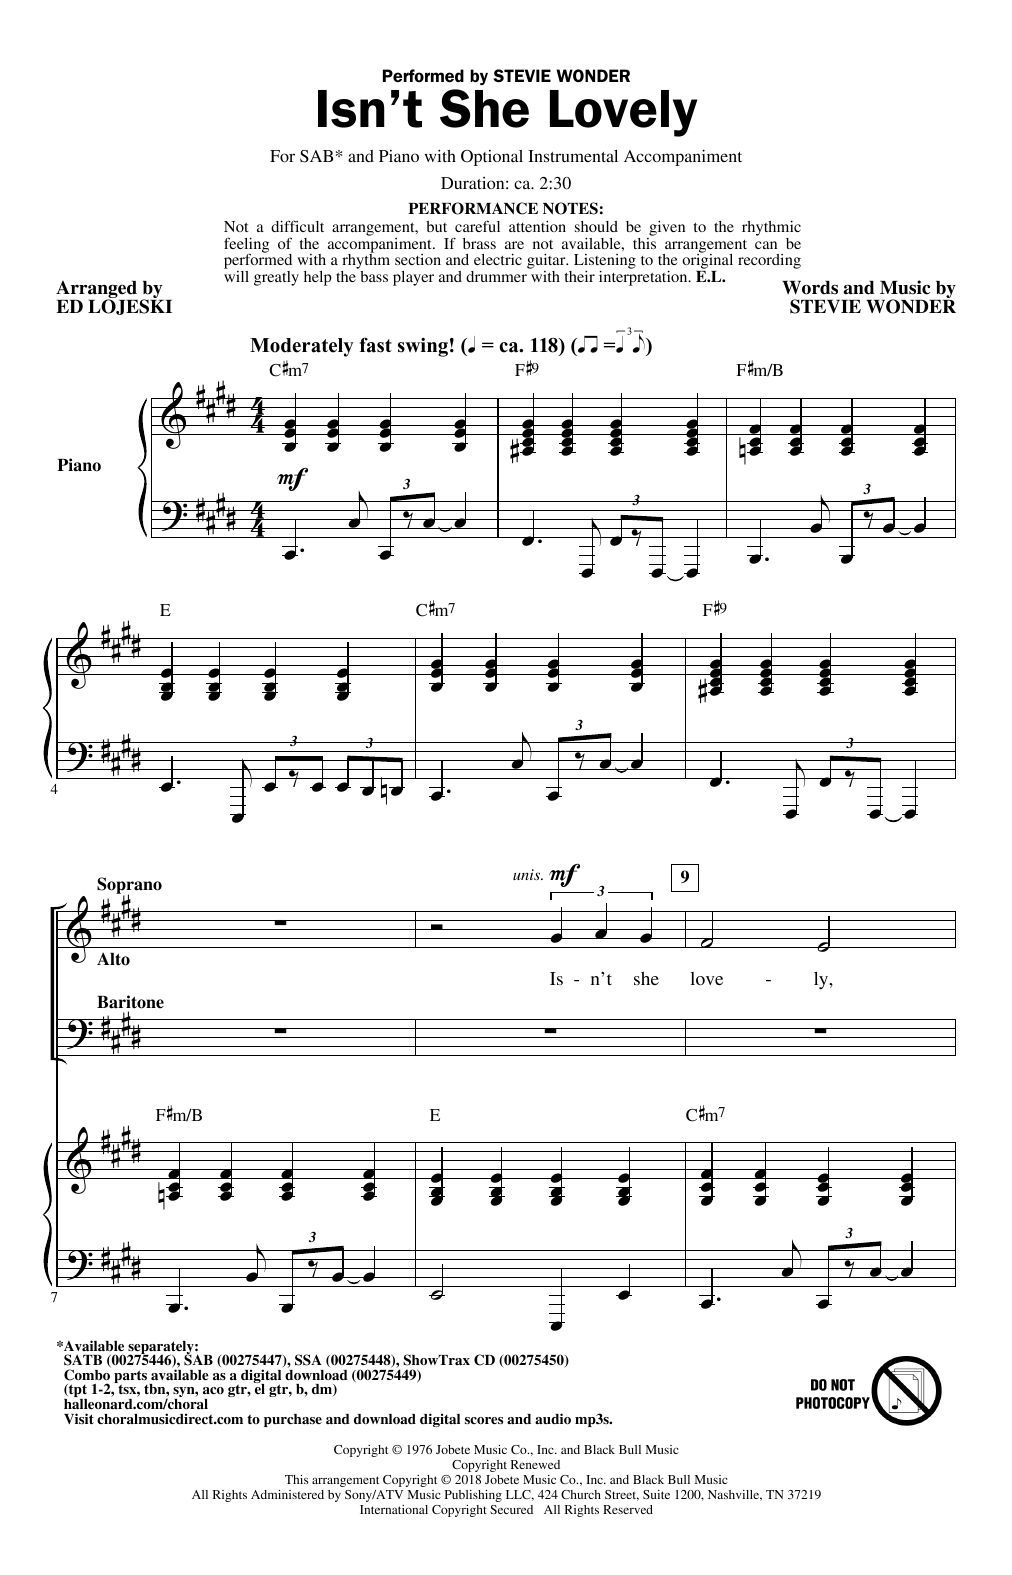 Stevie Wonder Isn't She Lovely (arr. Ed Lojeski) Sheet Music Notes & Chords for SAB - Download or Print PDF